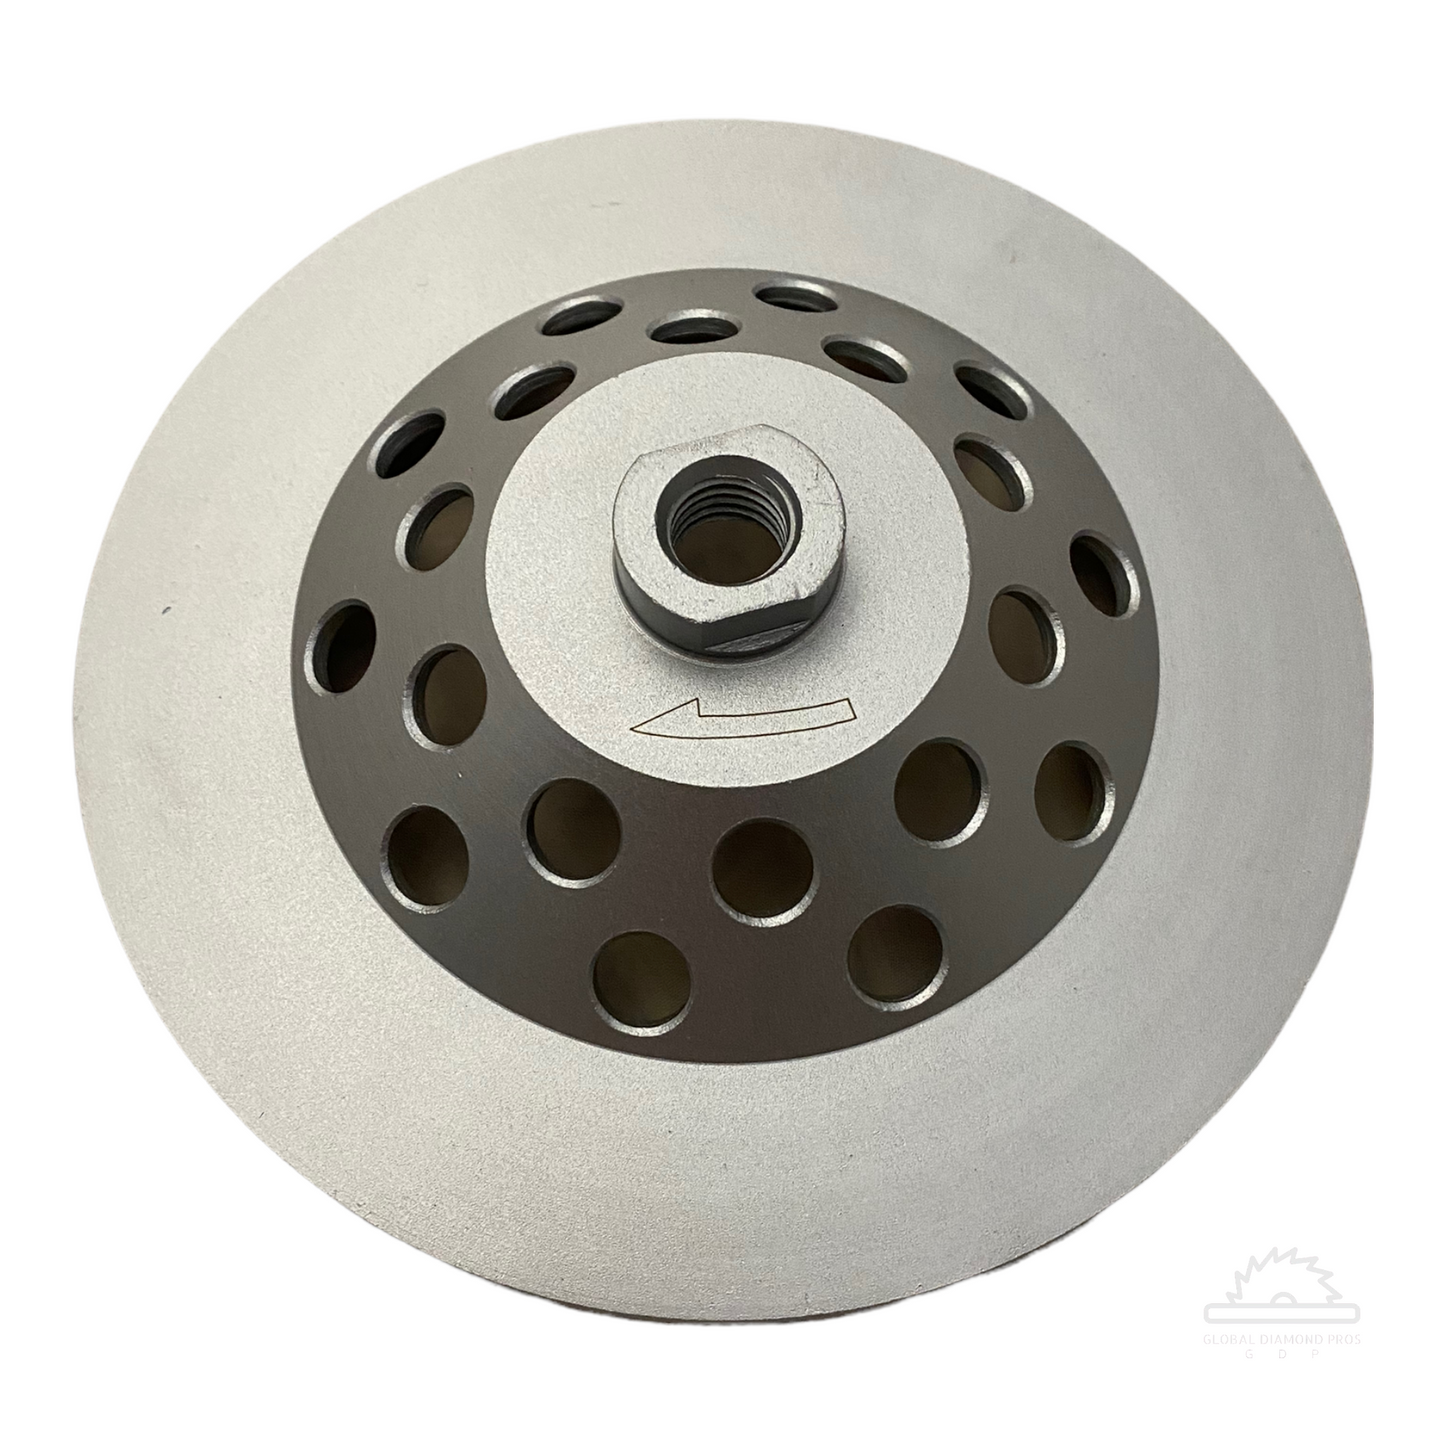 7 inch concrete grinding wheel